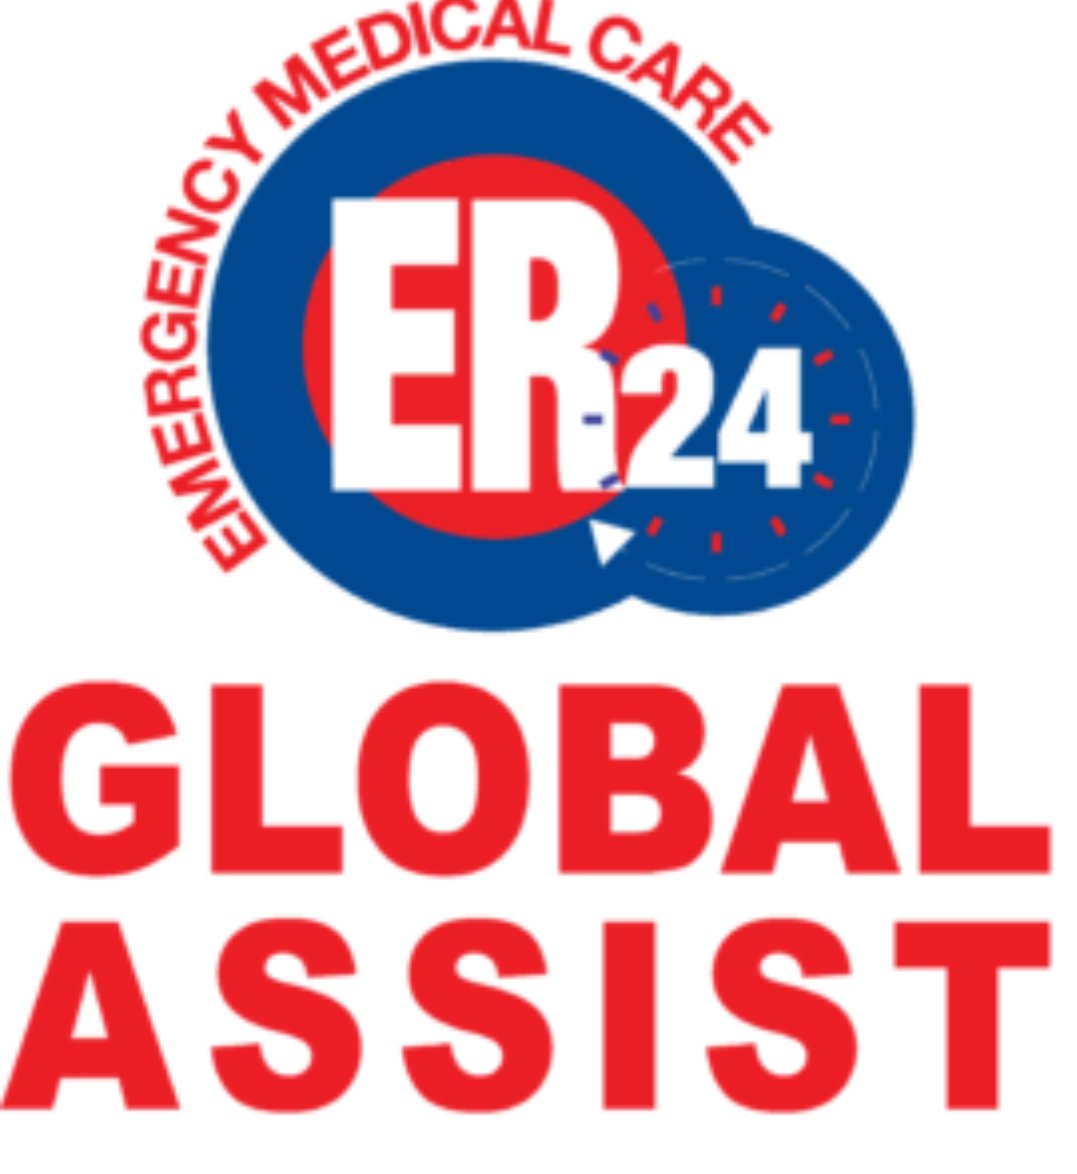 ER 24 logo-test sample.jpeg